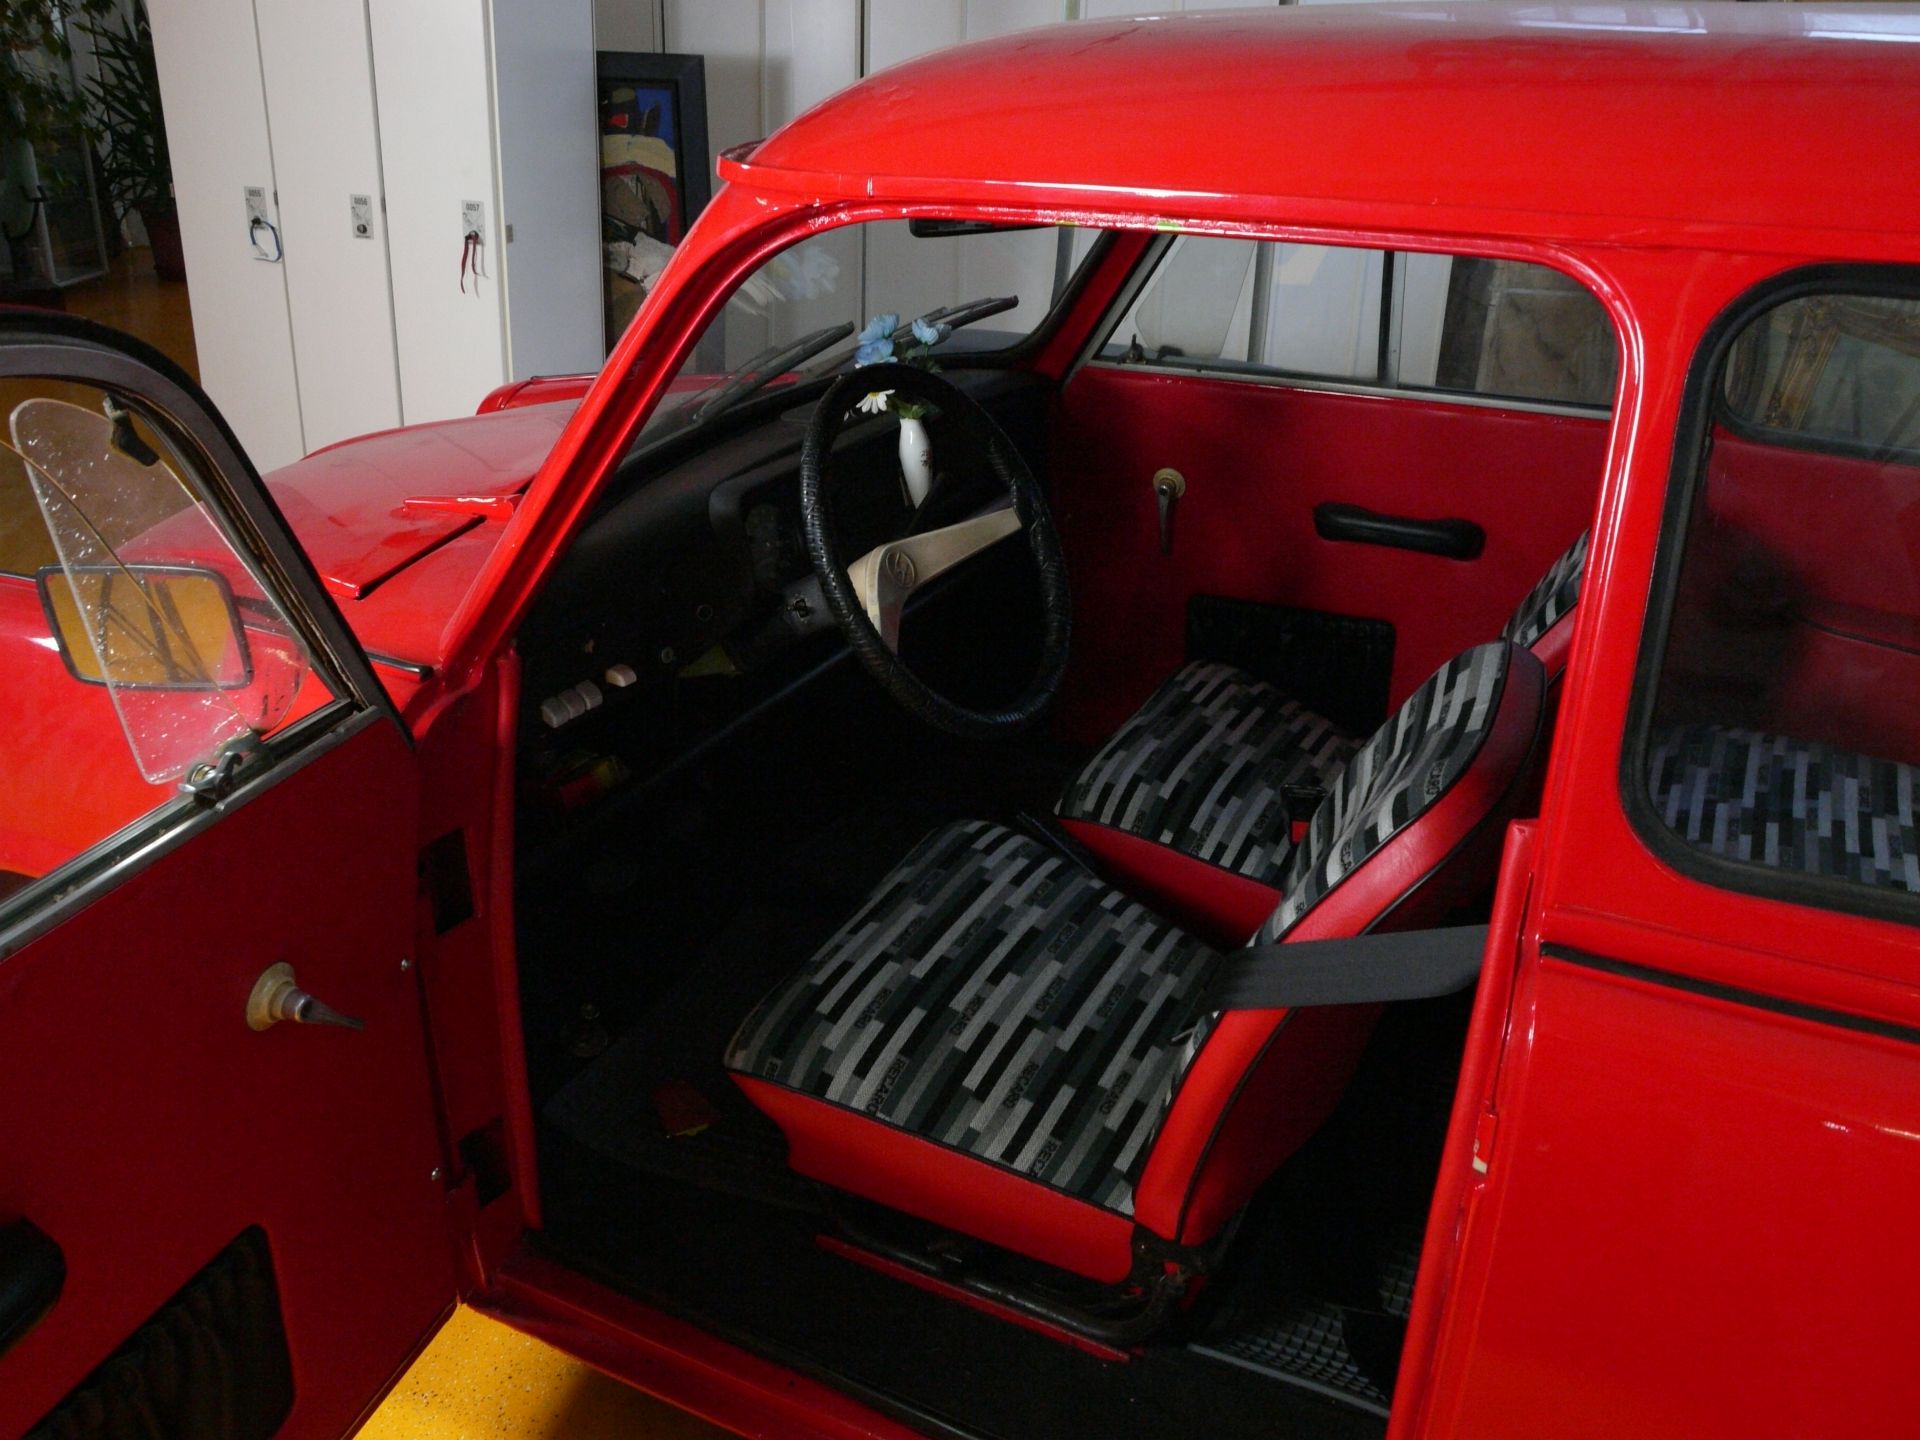 PKW Trabant 600 - Image 2 of 9